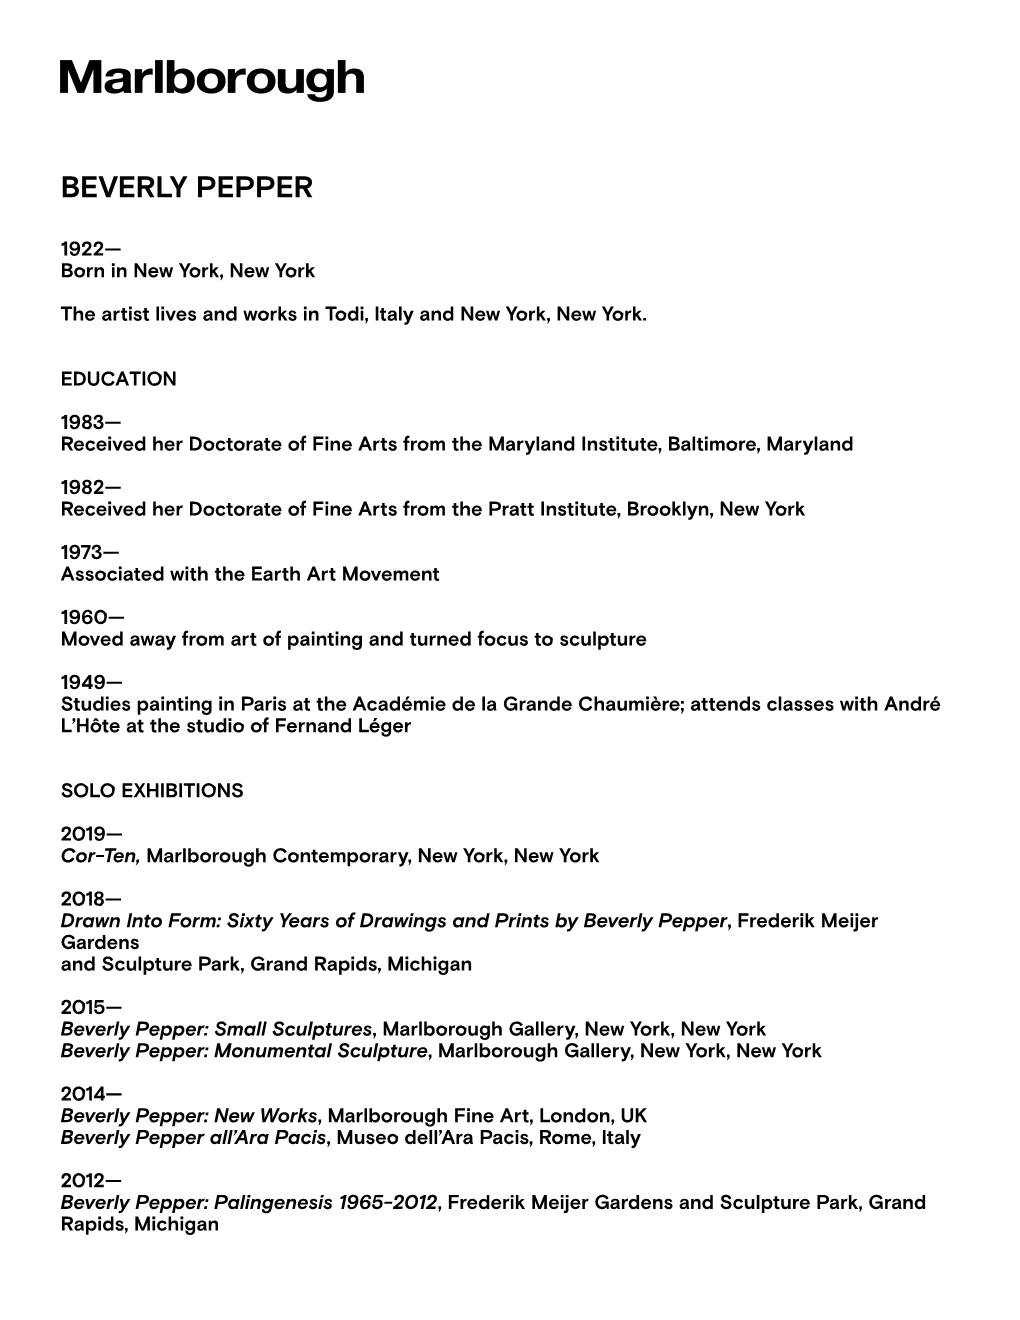 Pepper, Beverly CV 08 08 19